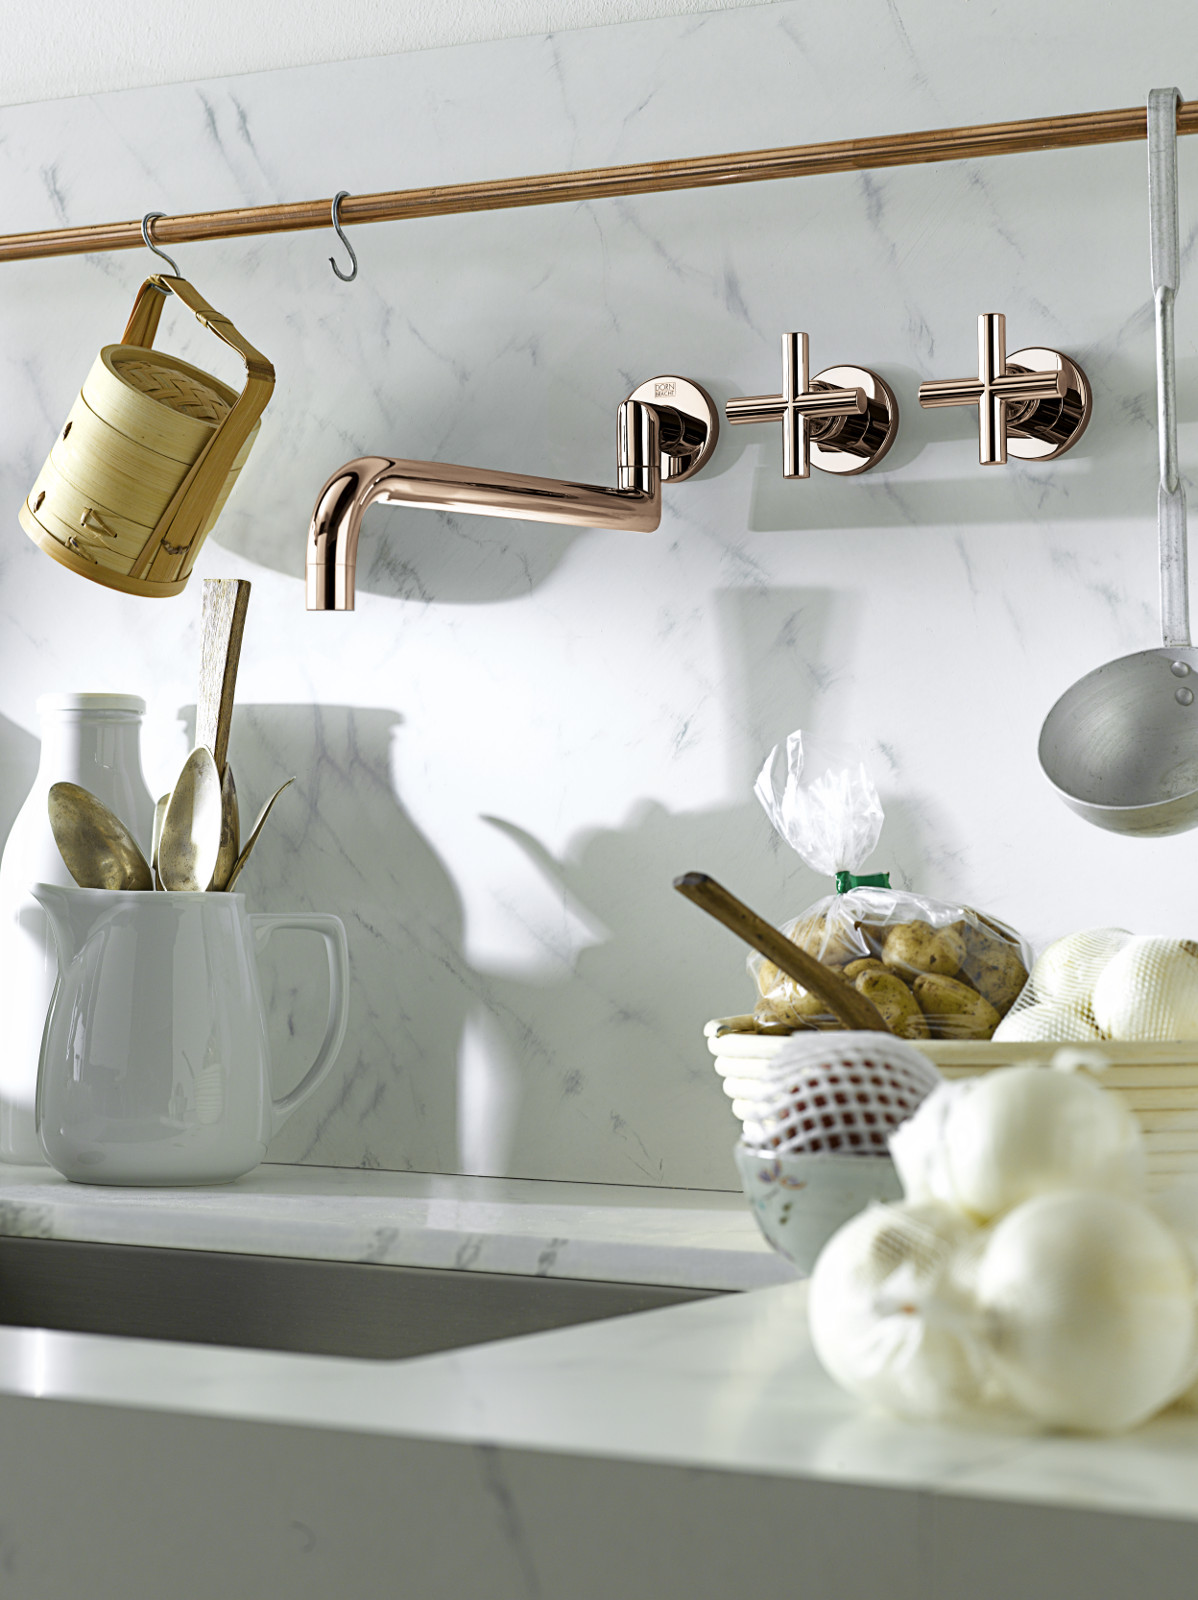 Dornbracht rose-gold kitchen faucet